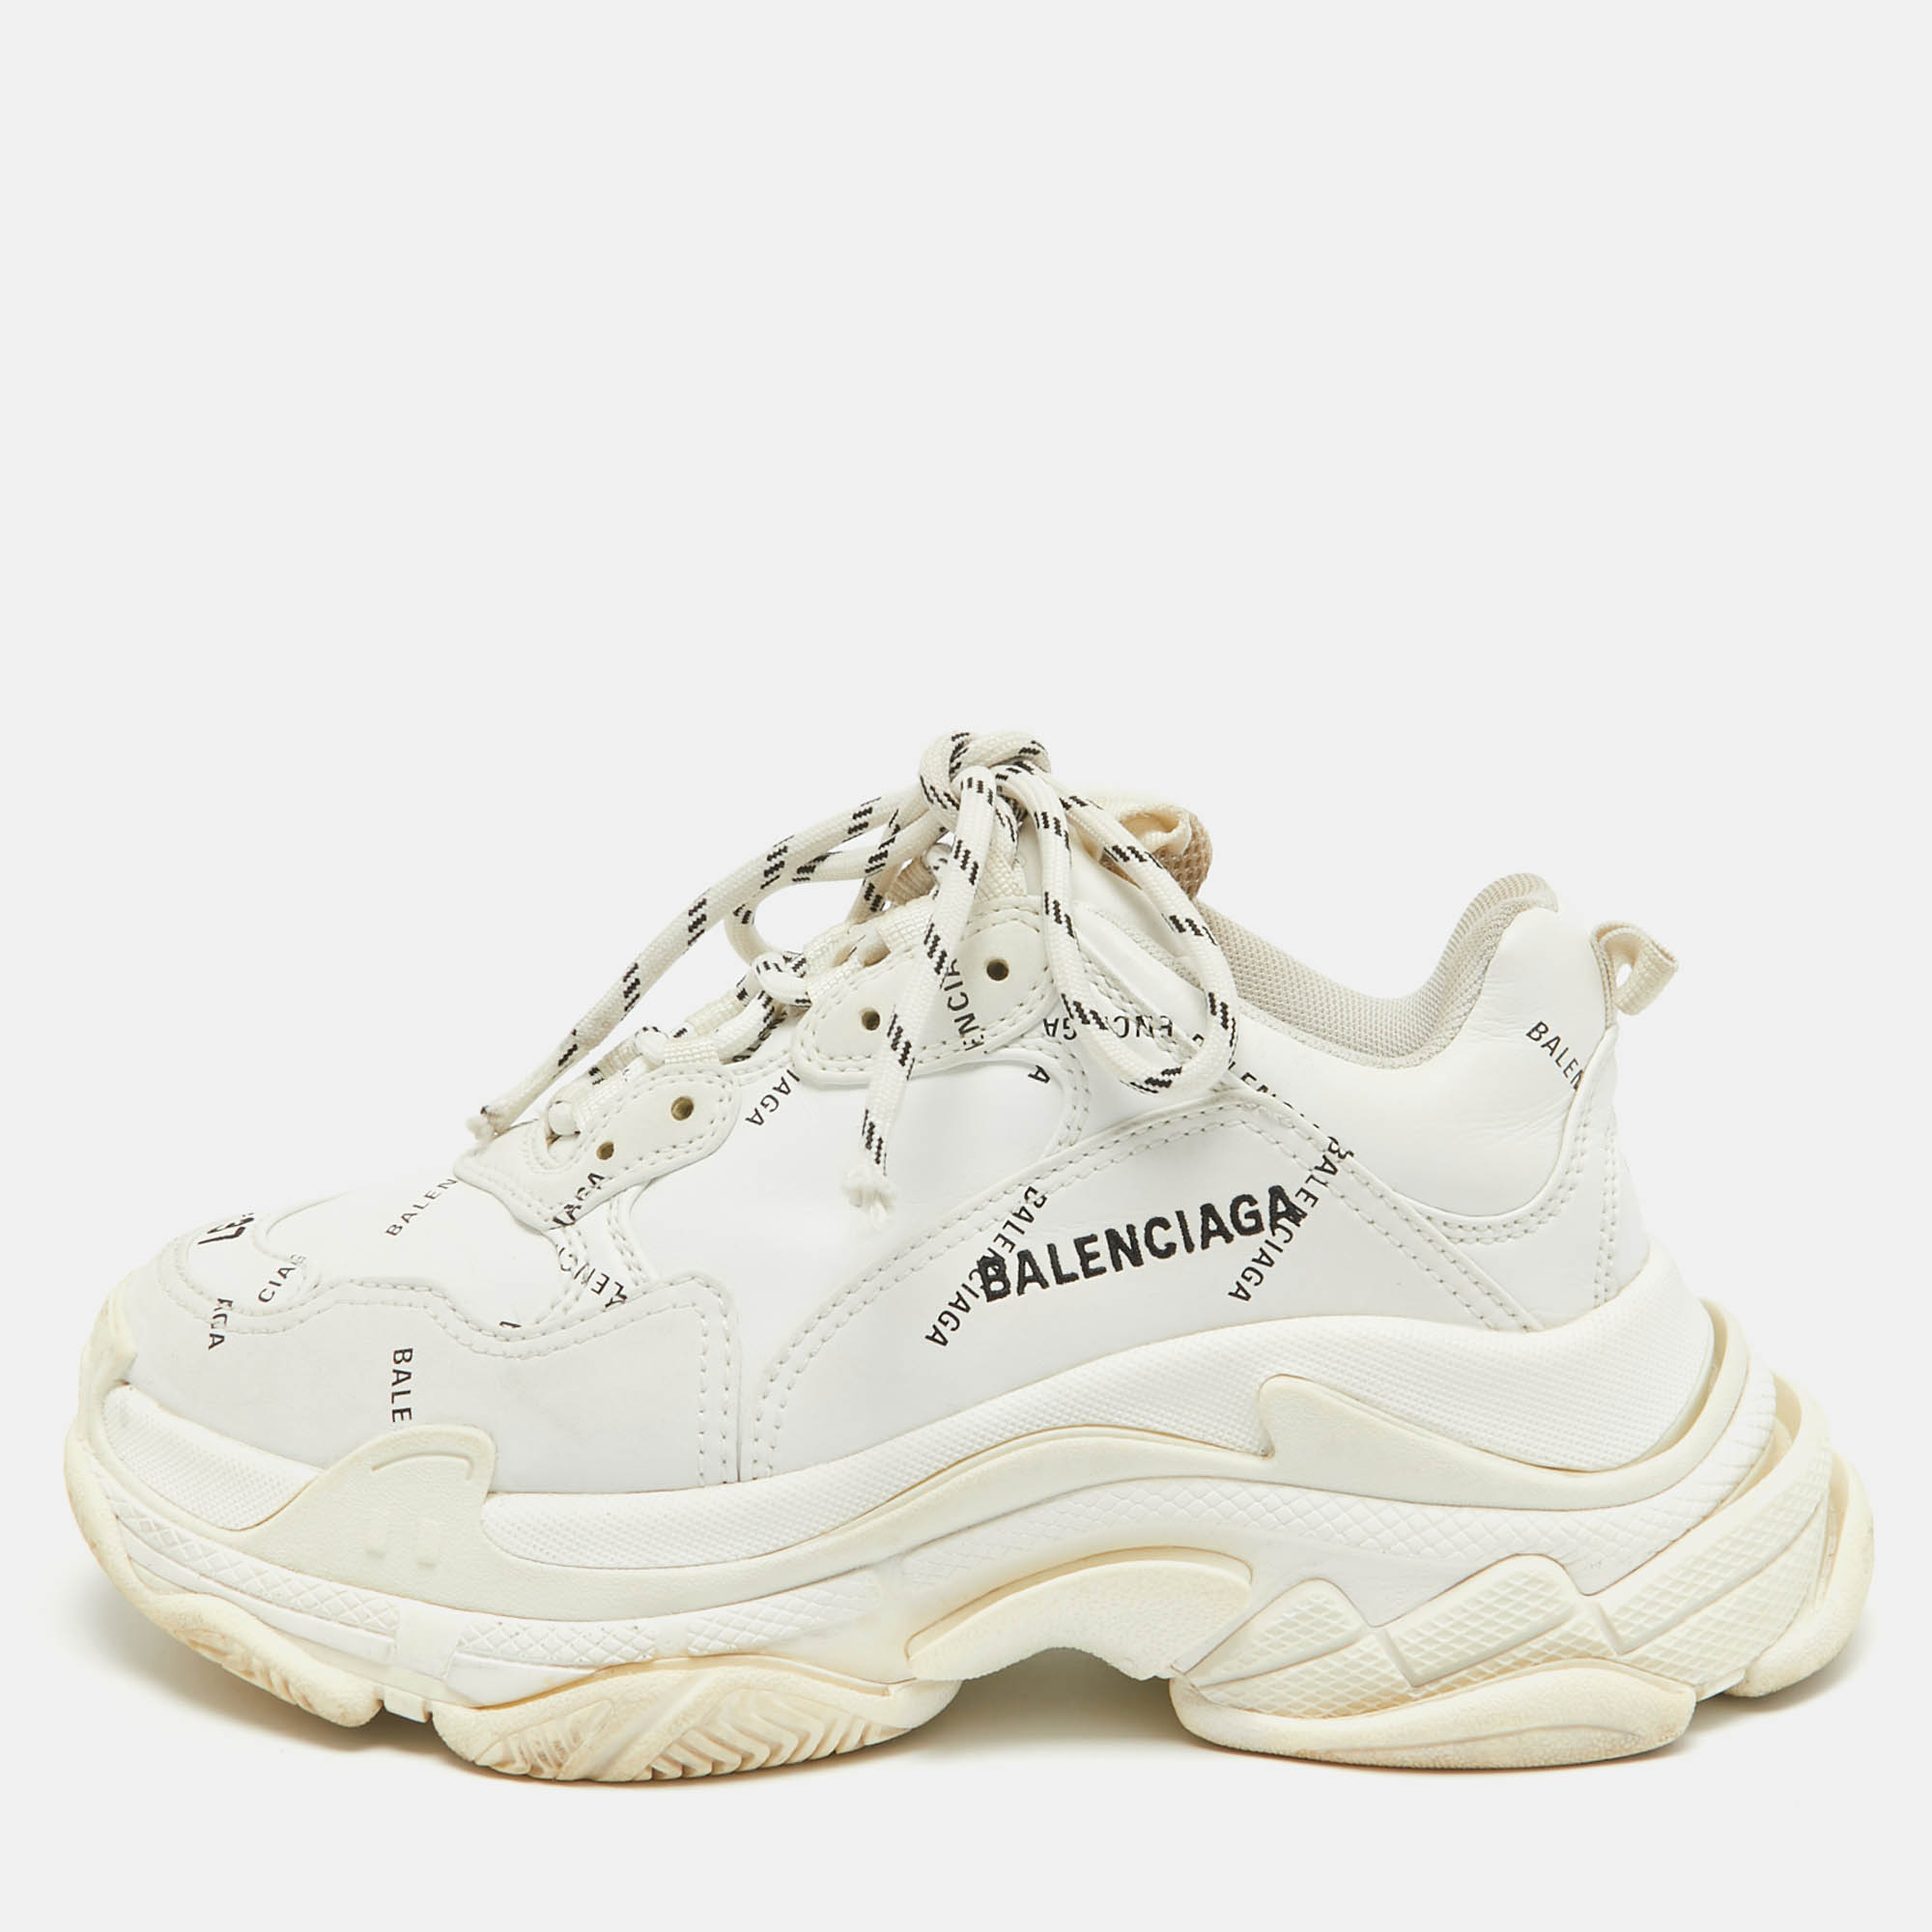 Balenciaga white faux leather triple s allover logo sneakers size 37